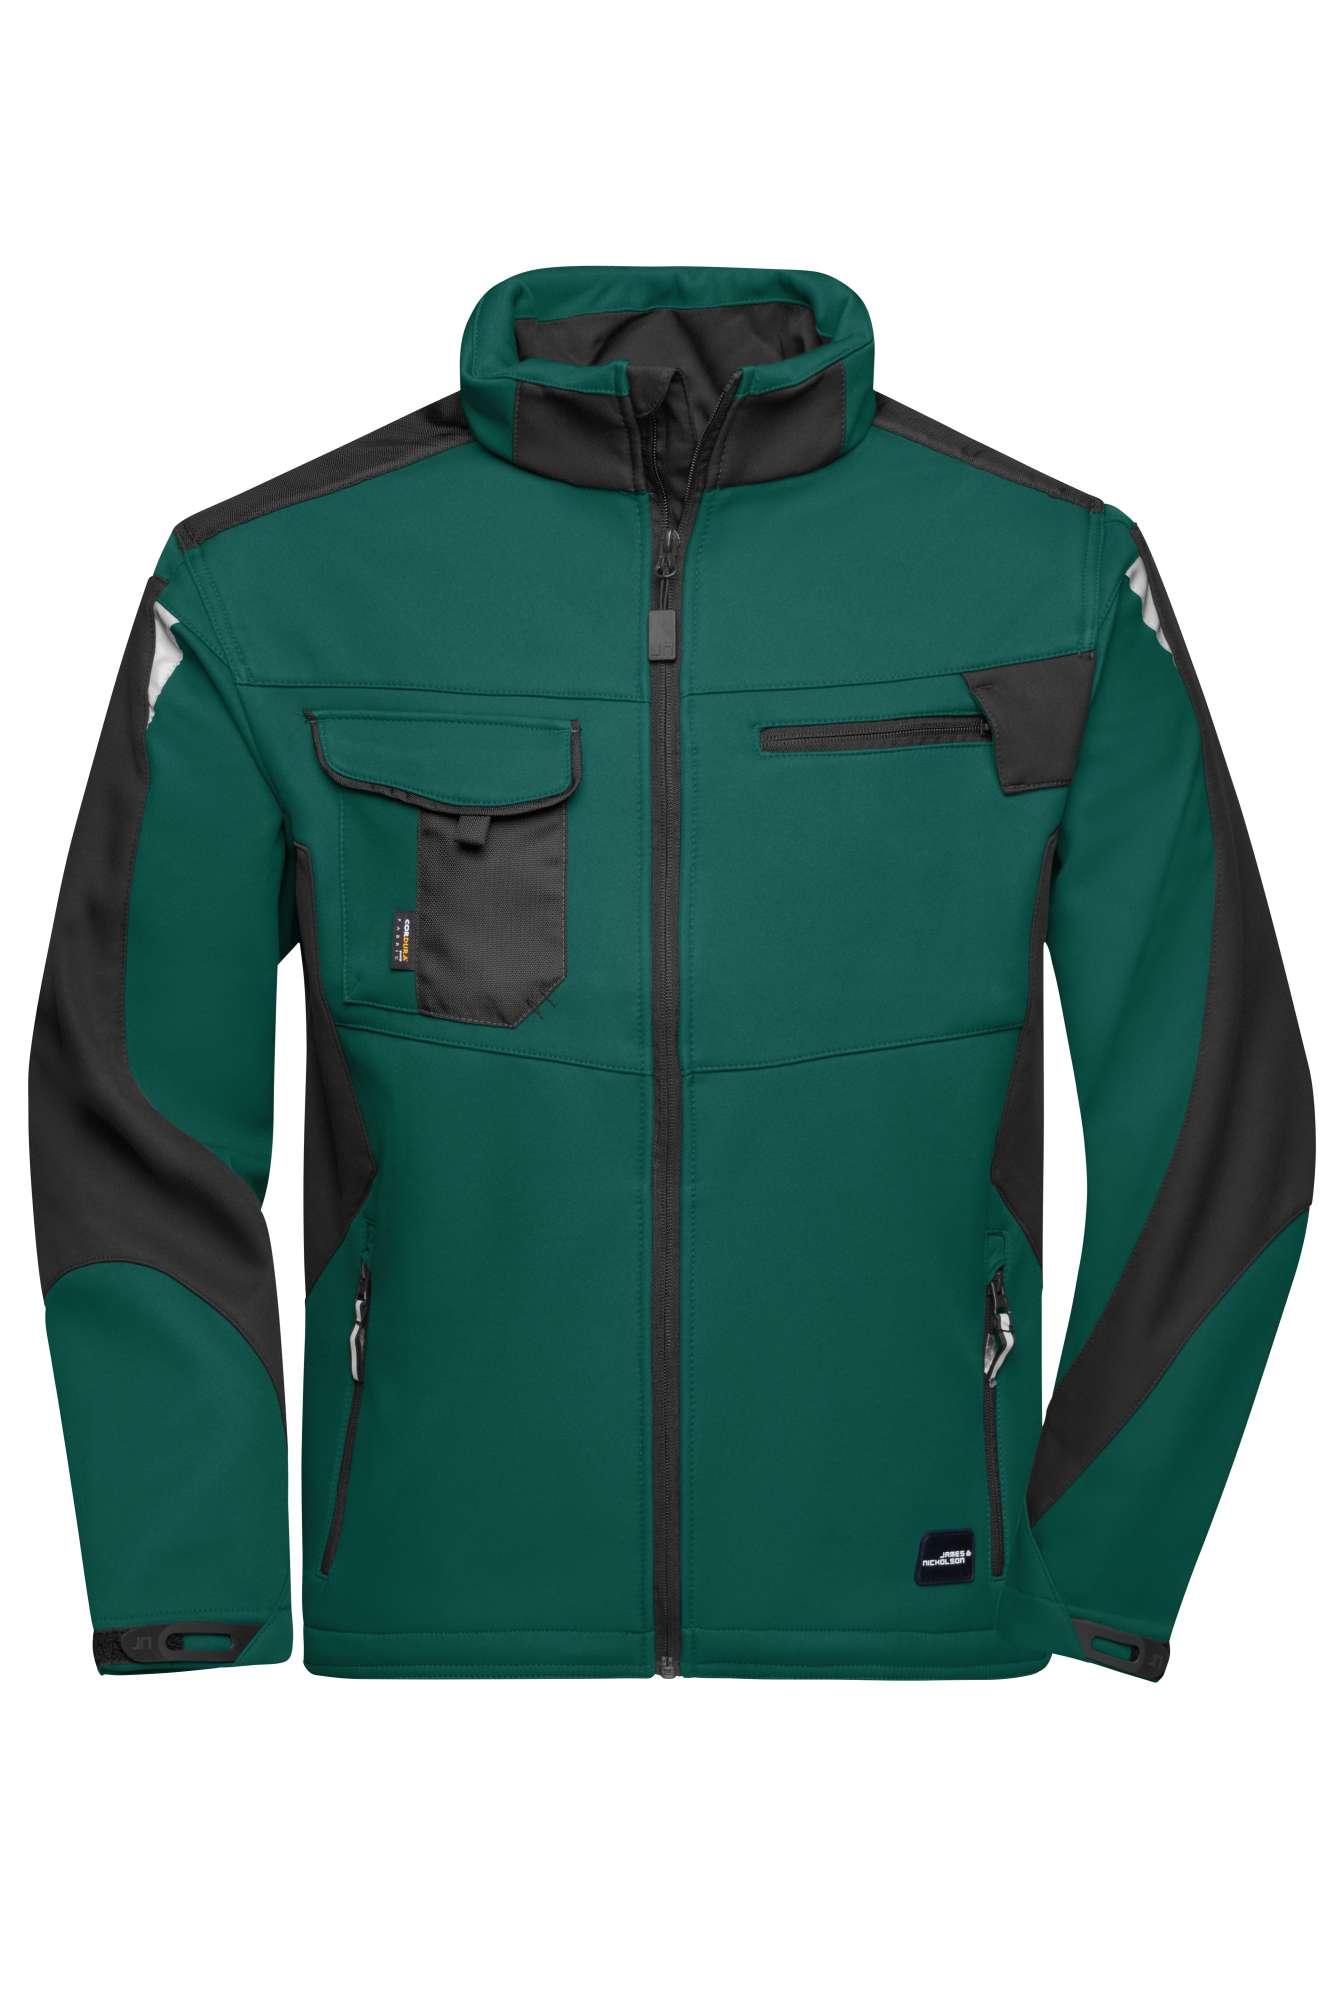 James&Nicholson Workwear Softshell Jacket -STRONG- Dark Green/Black S (JN844)